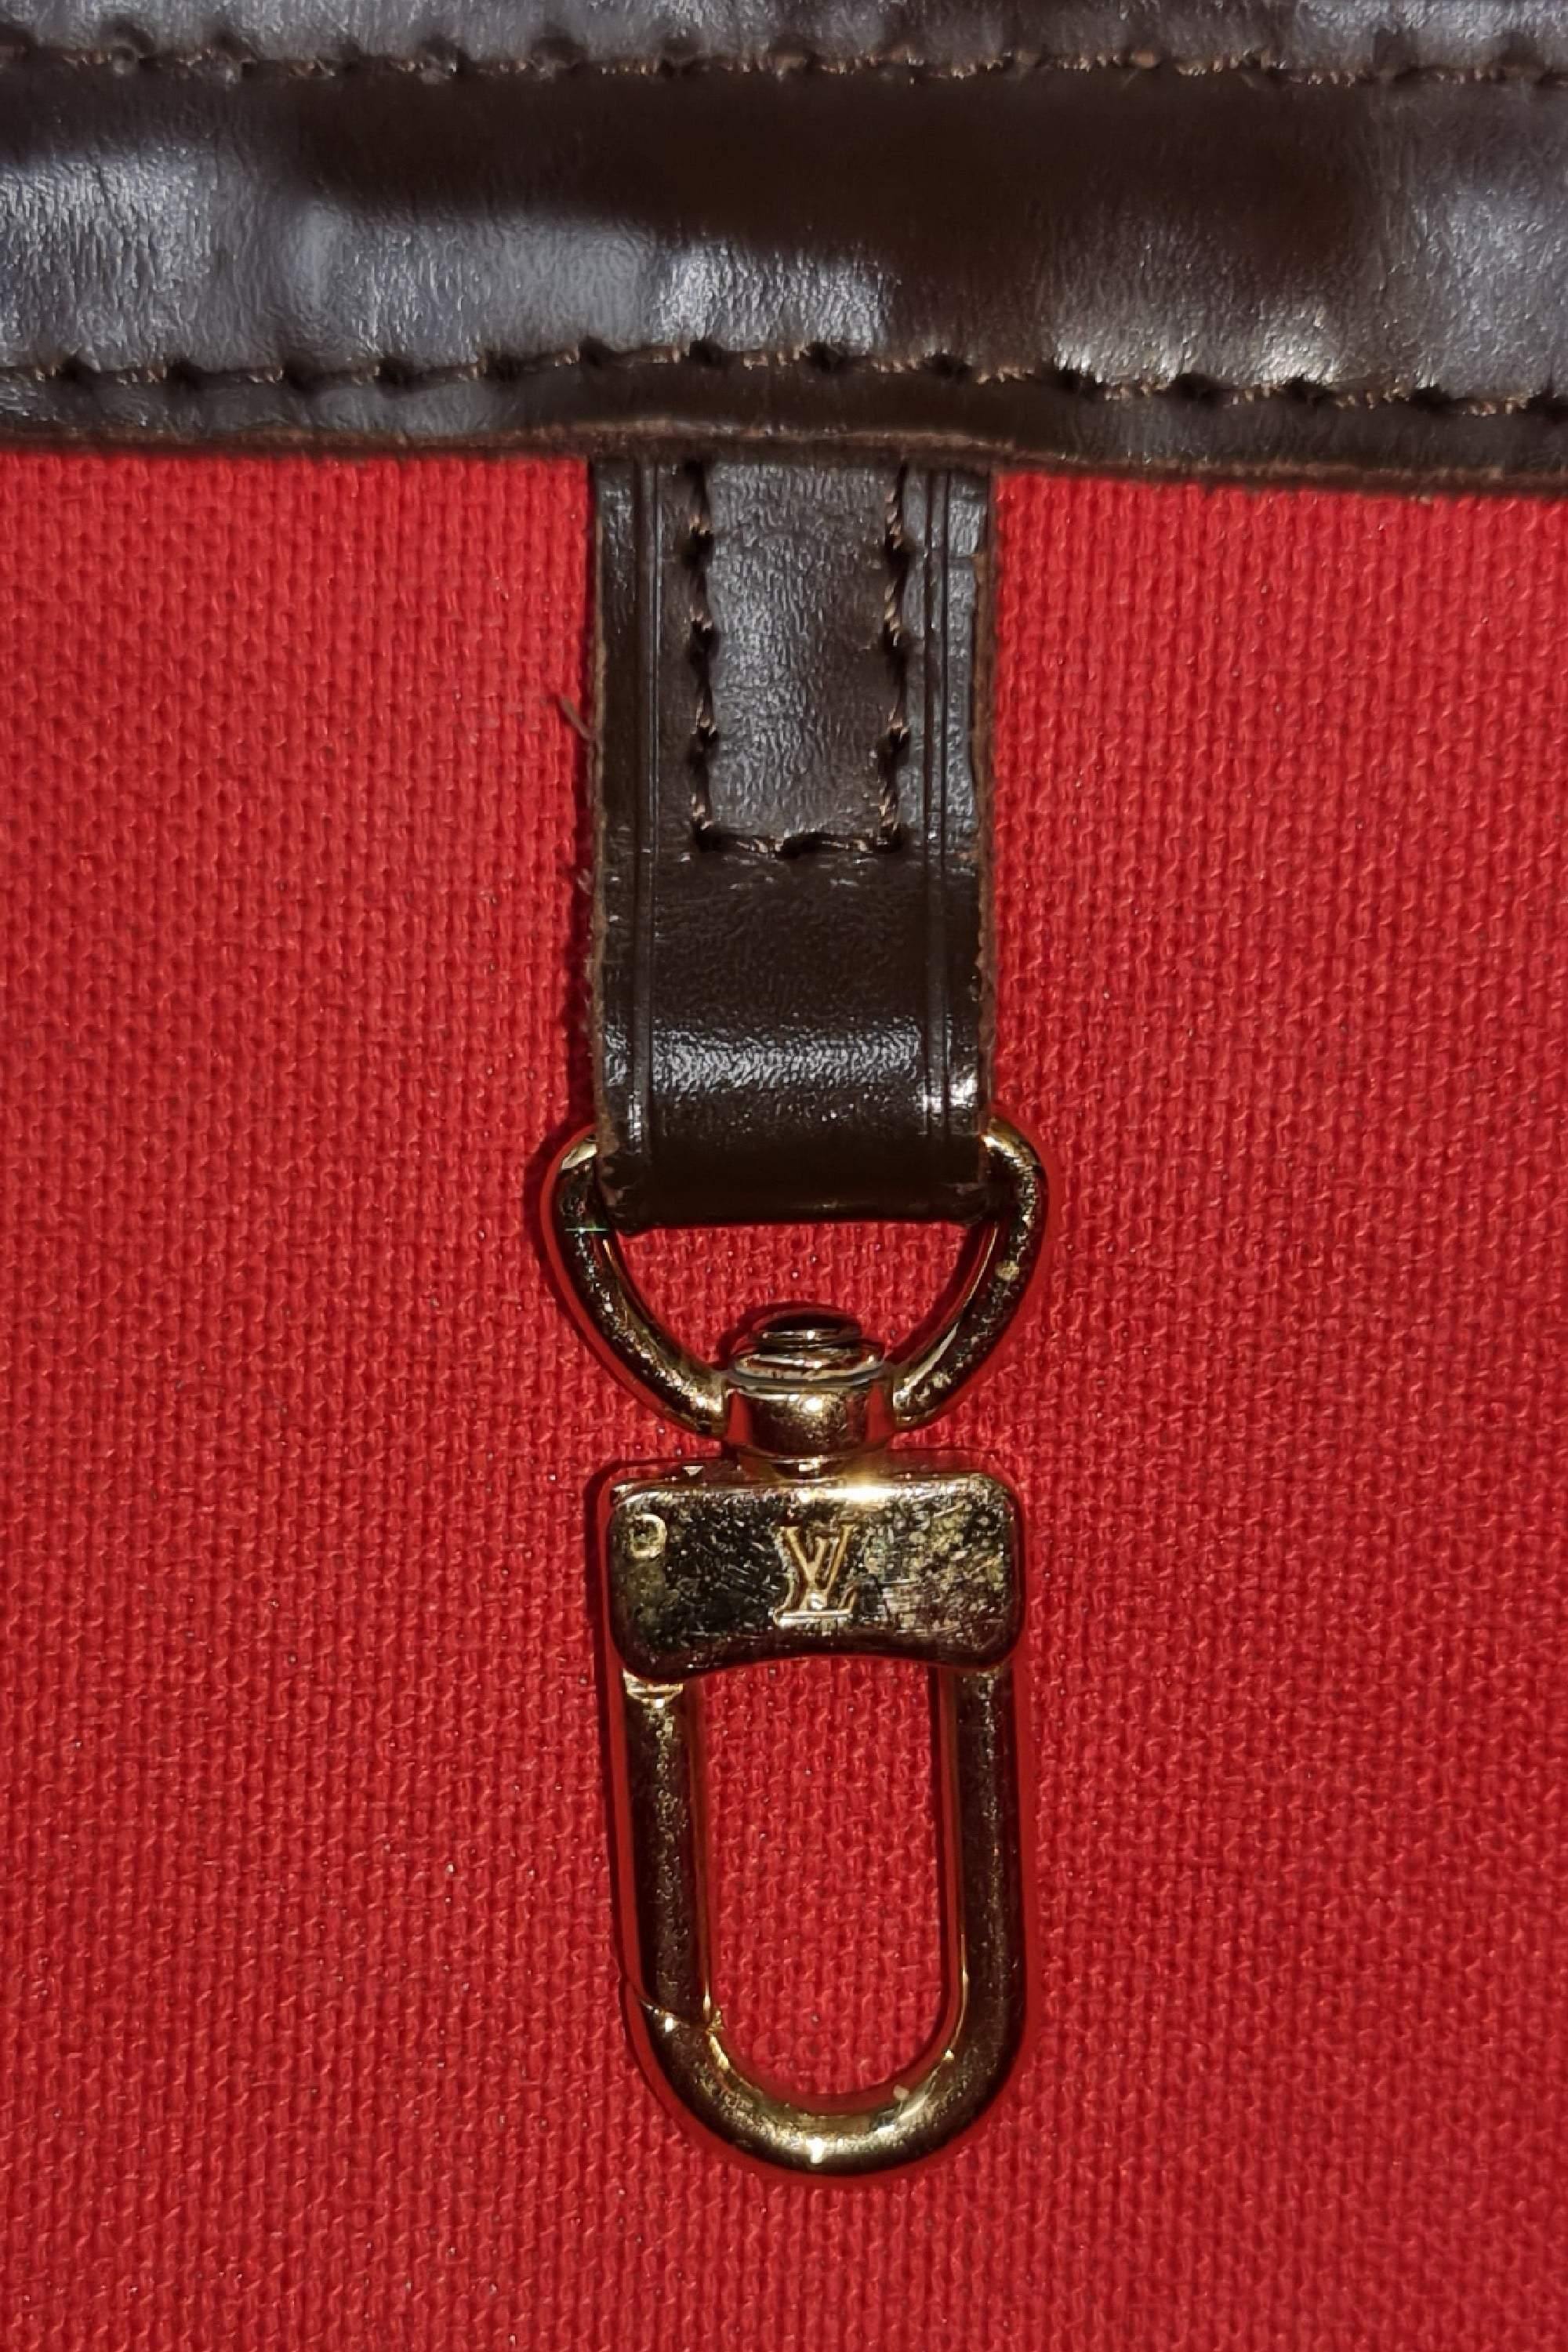 Louis Vuitton Hand Bag Cabas Rivington Damier Ebene Tote W/added Insert C43